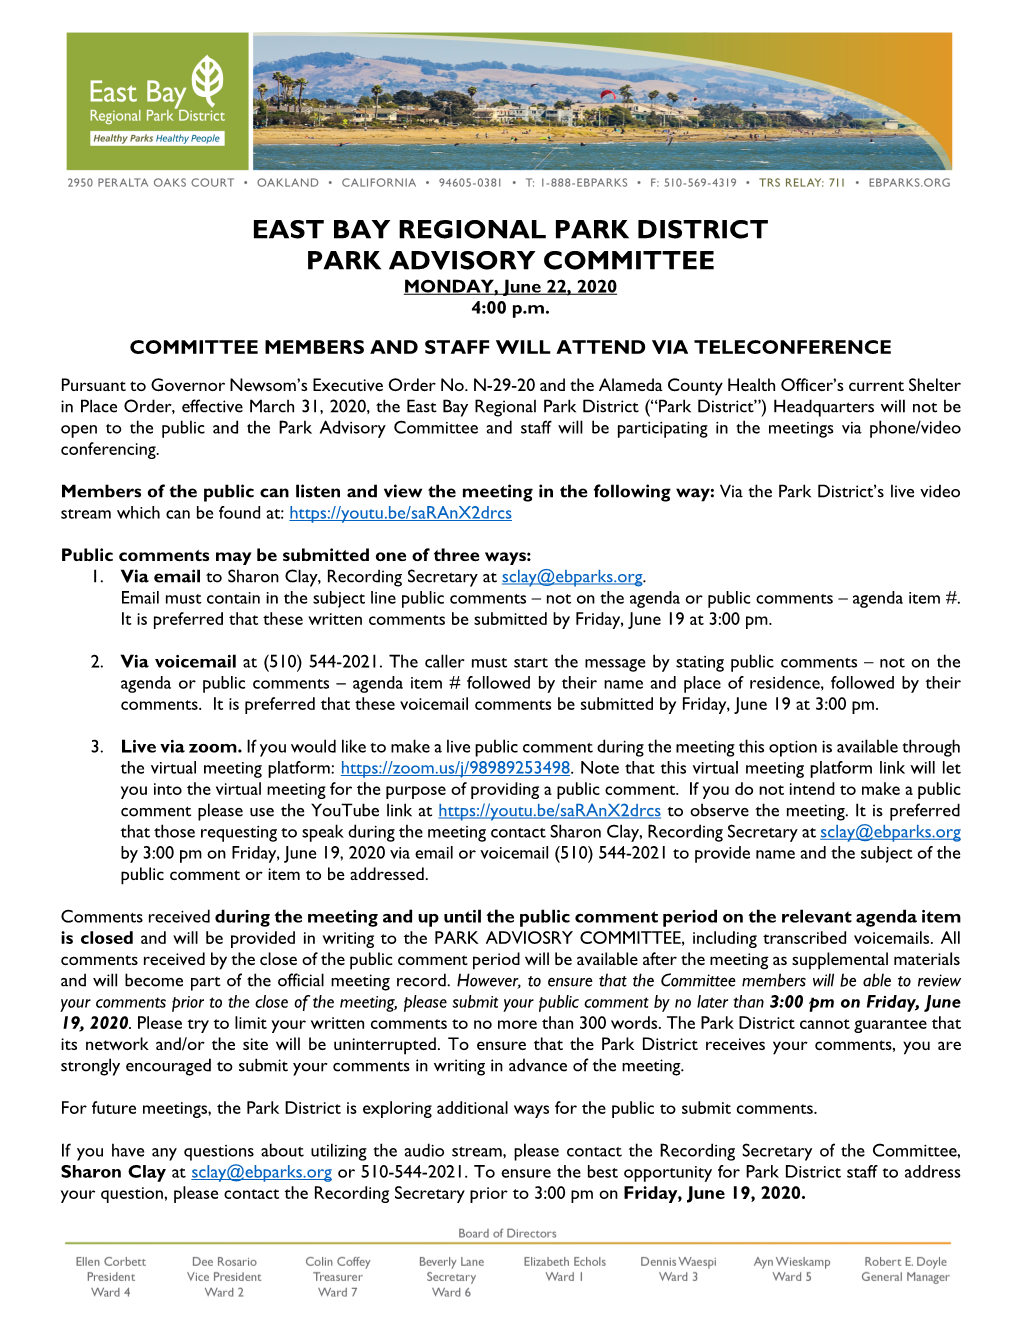 EAST BAY REGIONAL PARK DISTRICT PARK ADVISORY COMMITTEE MONDAY, June 22, 2020 4:00 P.M